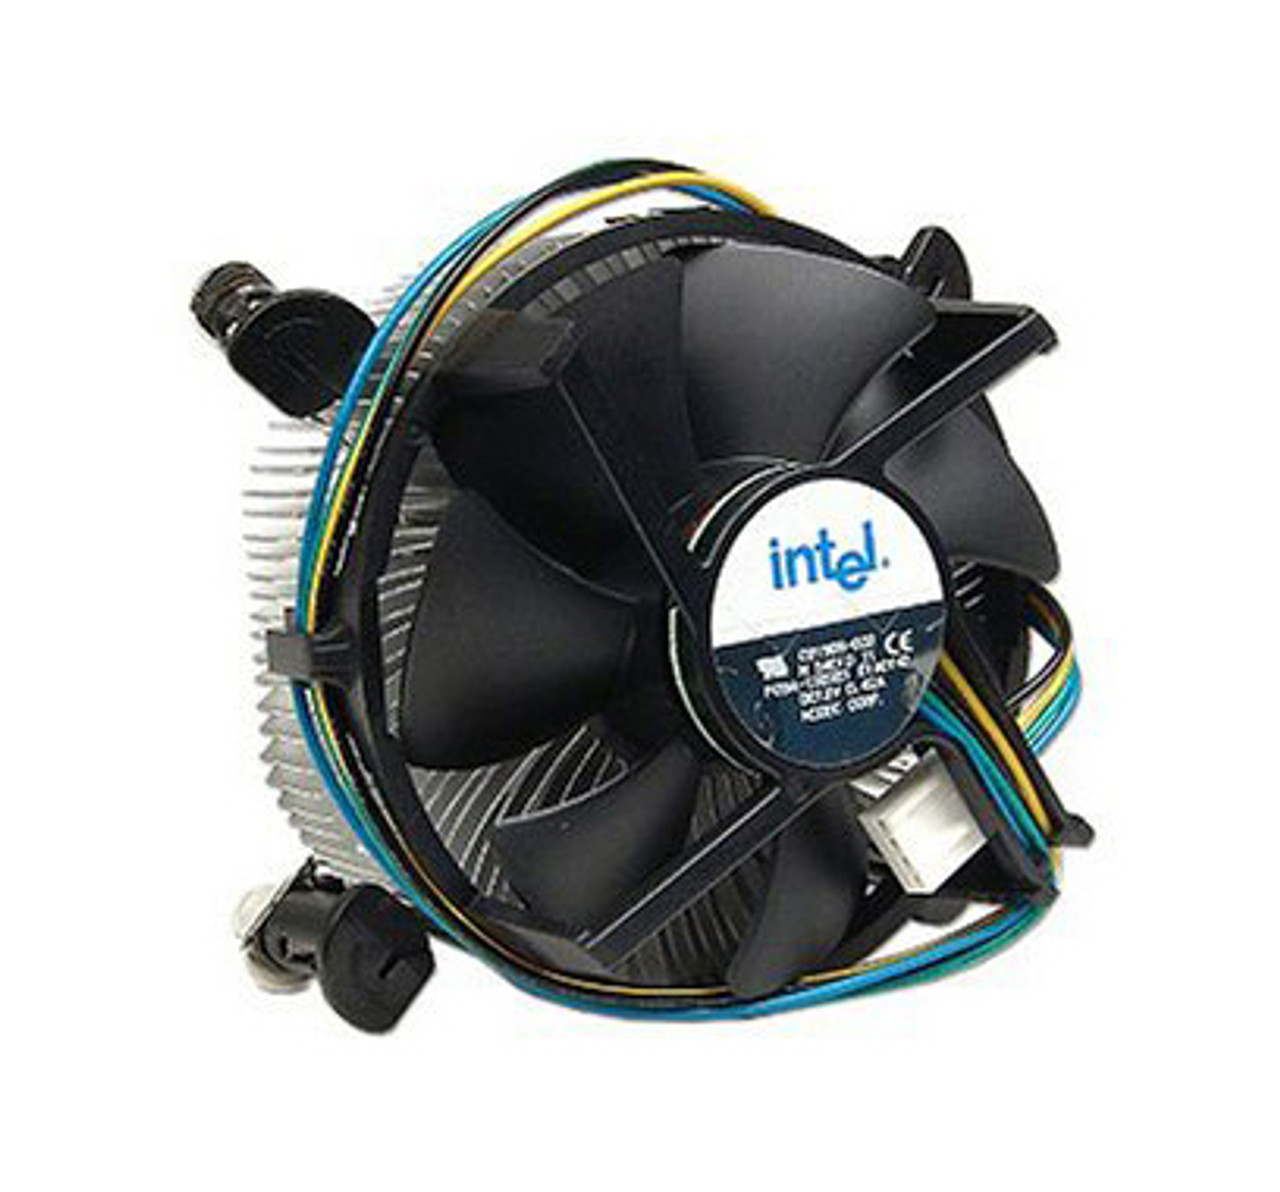 D34017-002 Intel CPU Heatsink and Fan Assembly